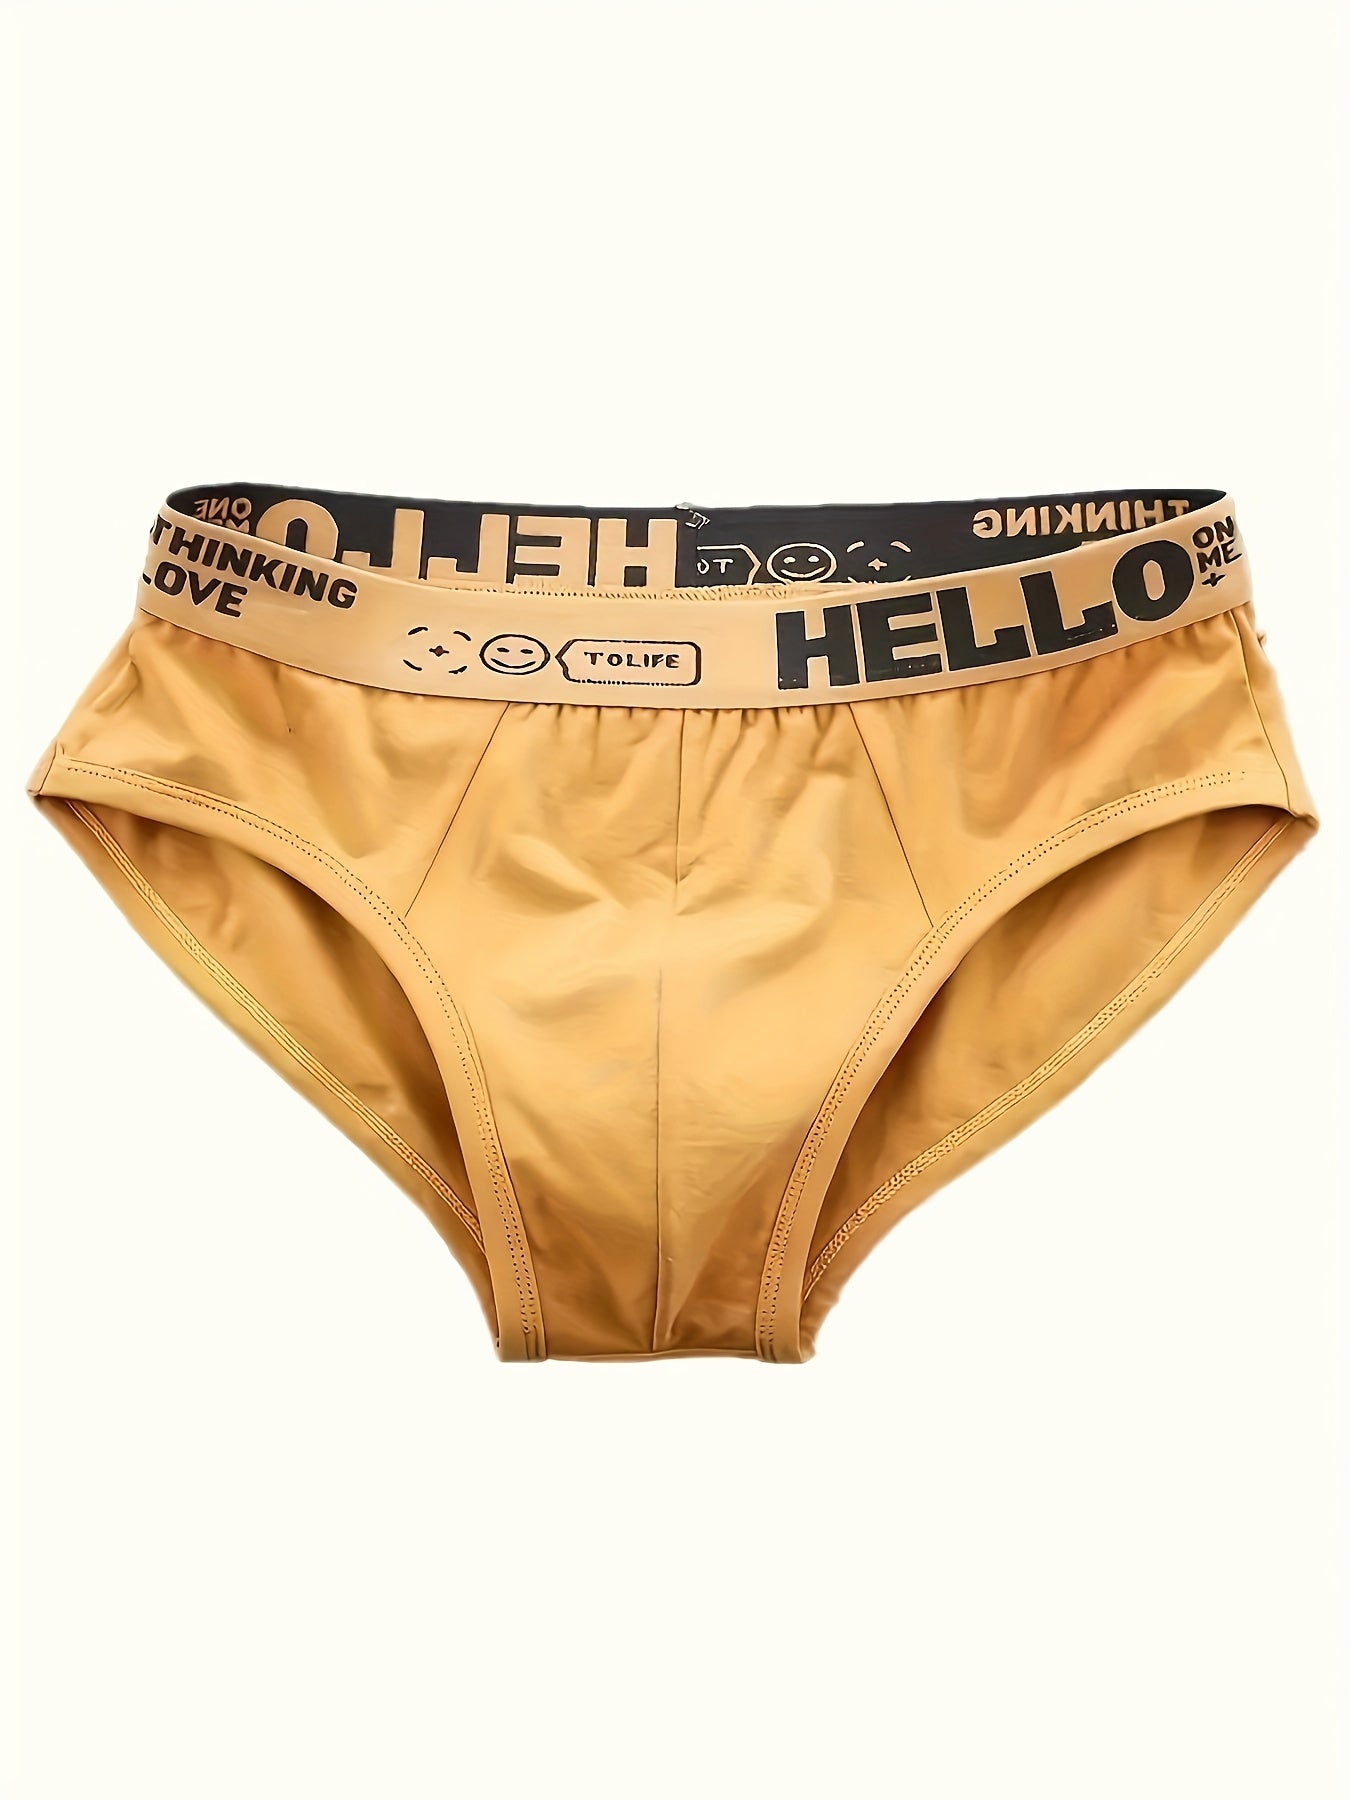 "10pcs Men's 'HELLO Print' Fashion Briefs - Cool, Sexy, Comfortable Underwear for Summer"